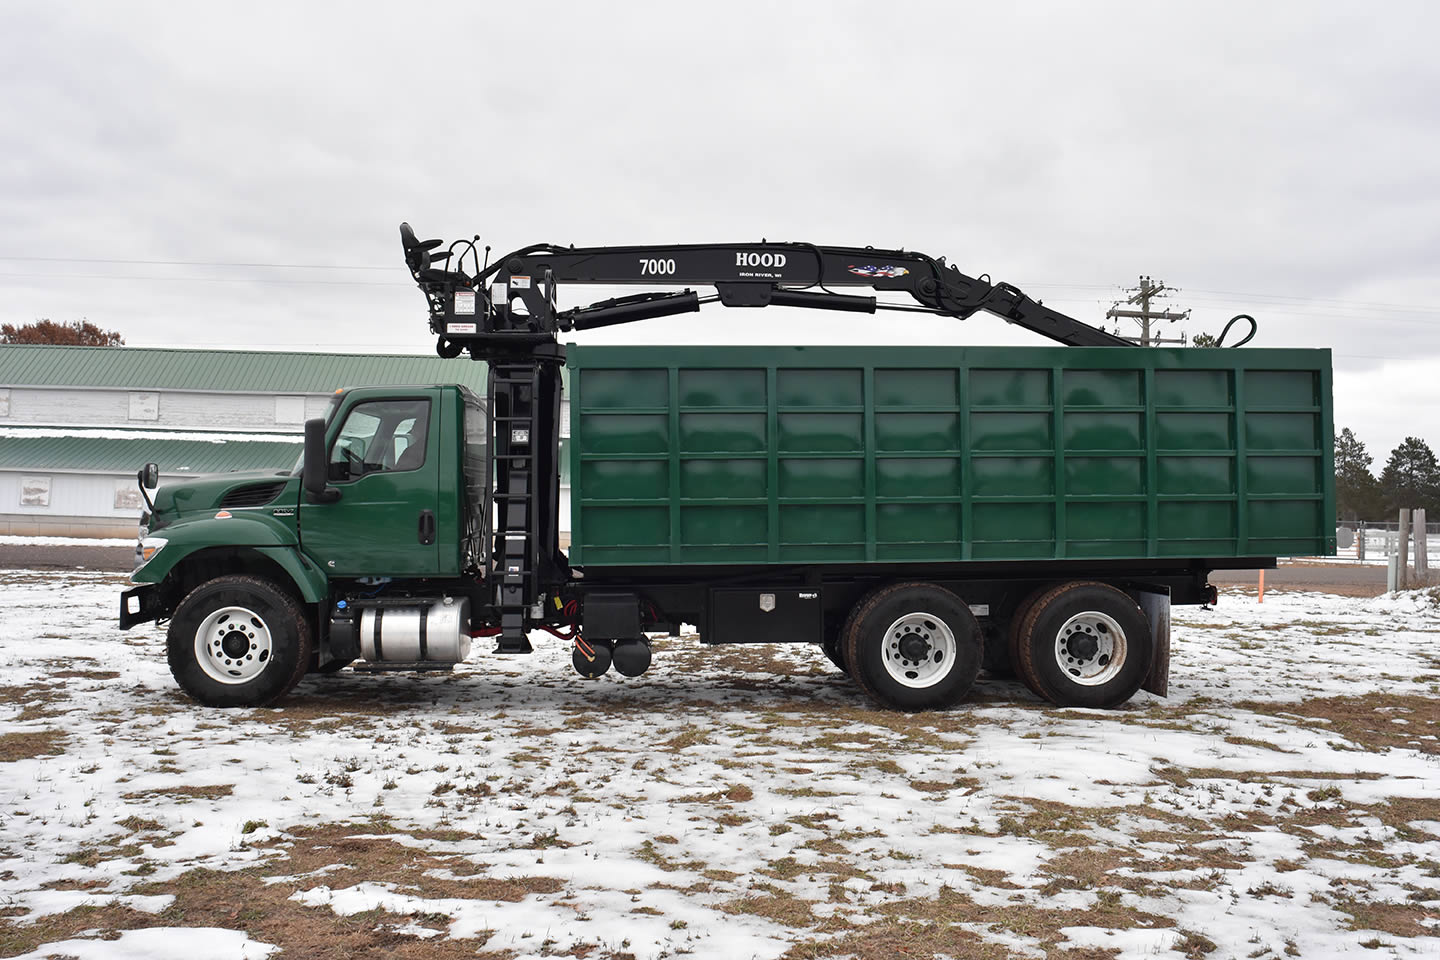 hood-loaders-truck-bed-side-view-green-2